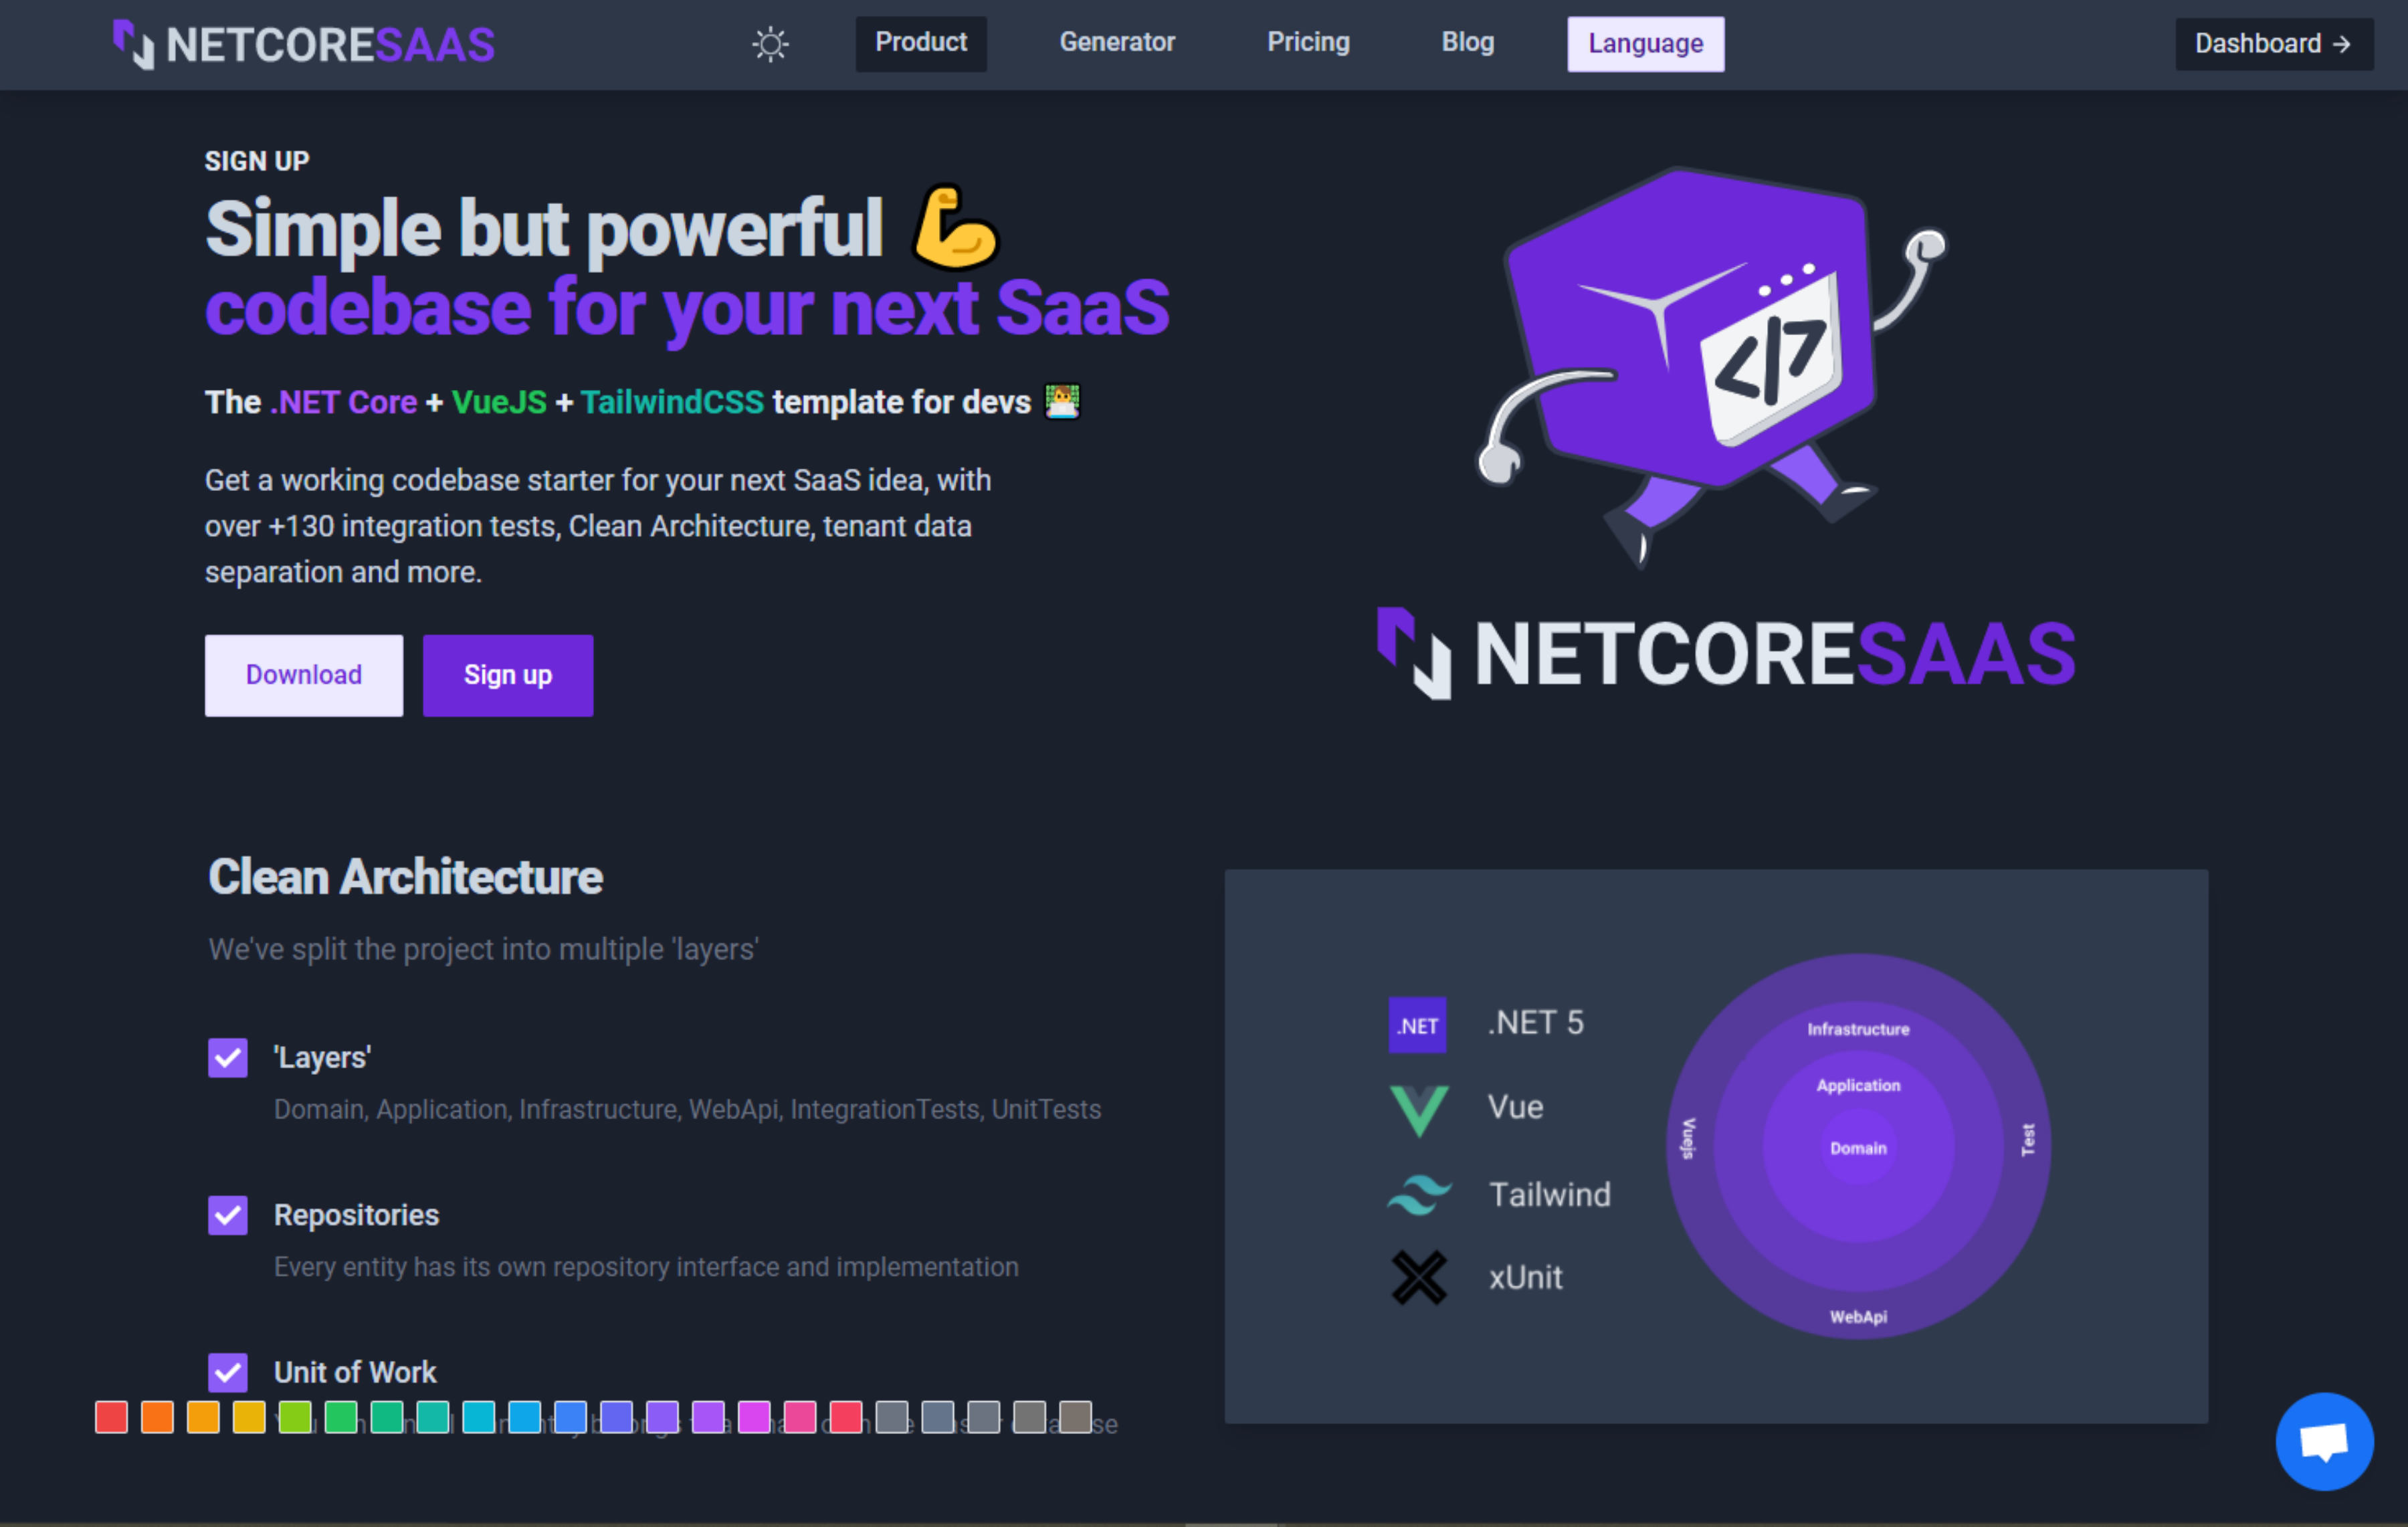 NetcoreSaas - Landing page (marketing side)